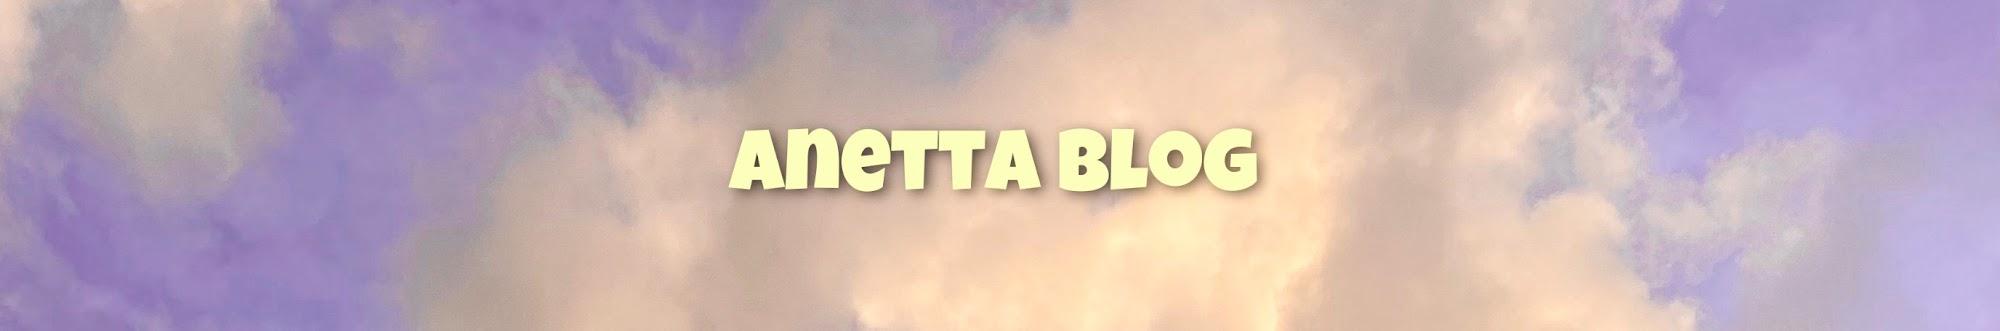 Anetta blog